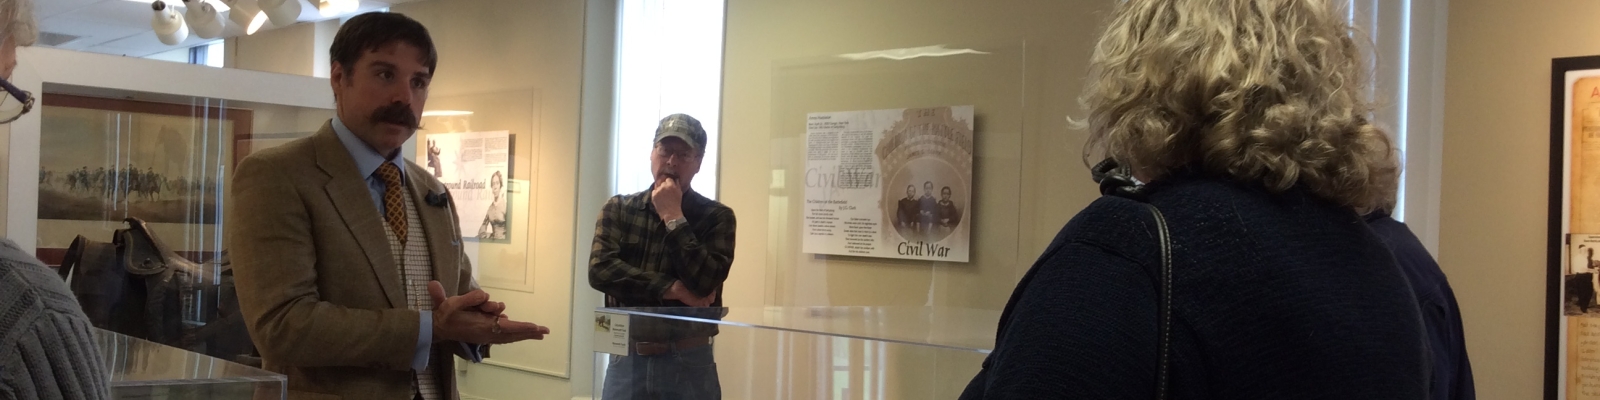 Visitors listening to Historian talk at Cattaraugus County Museum